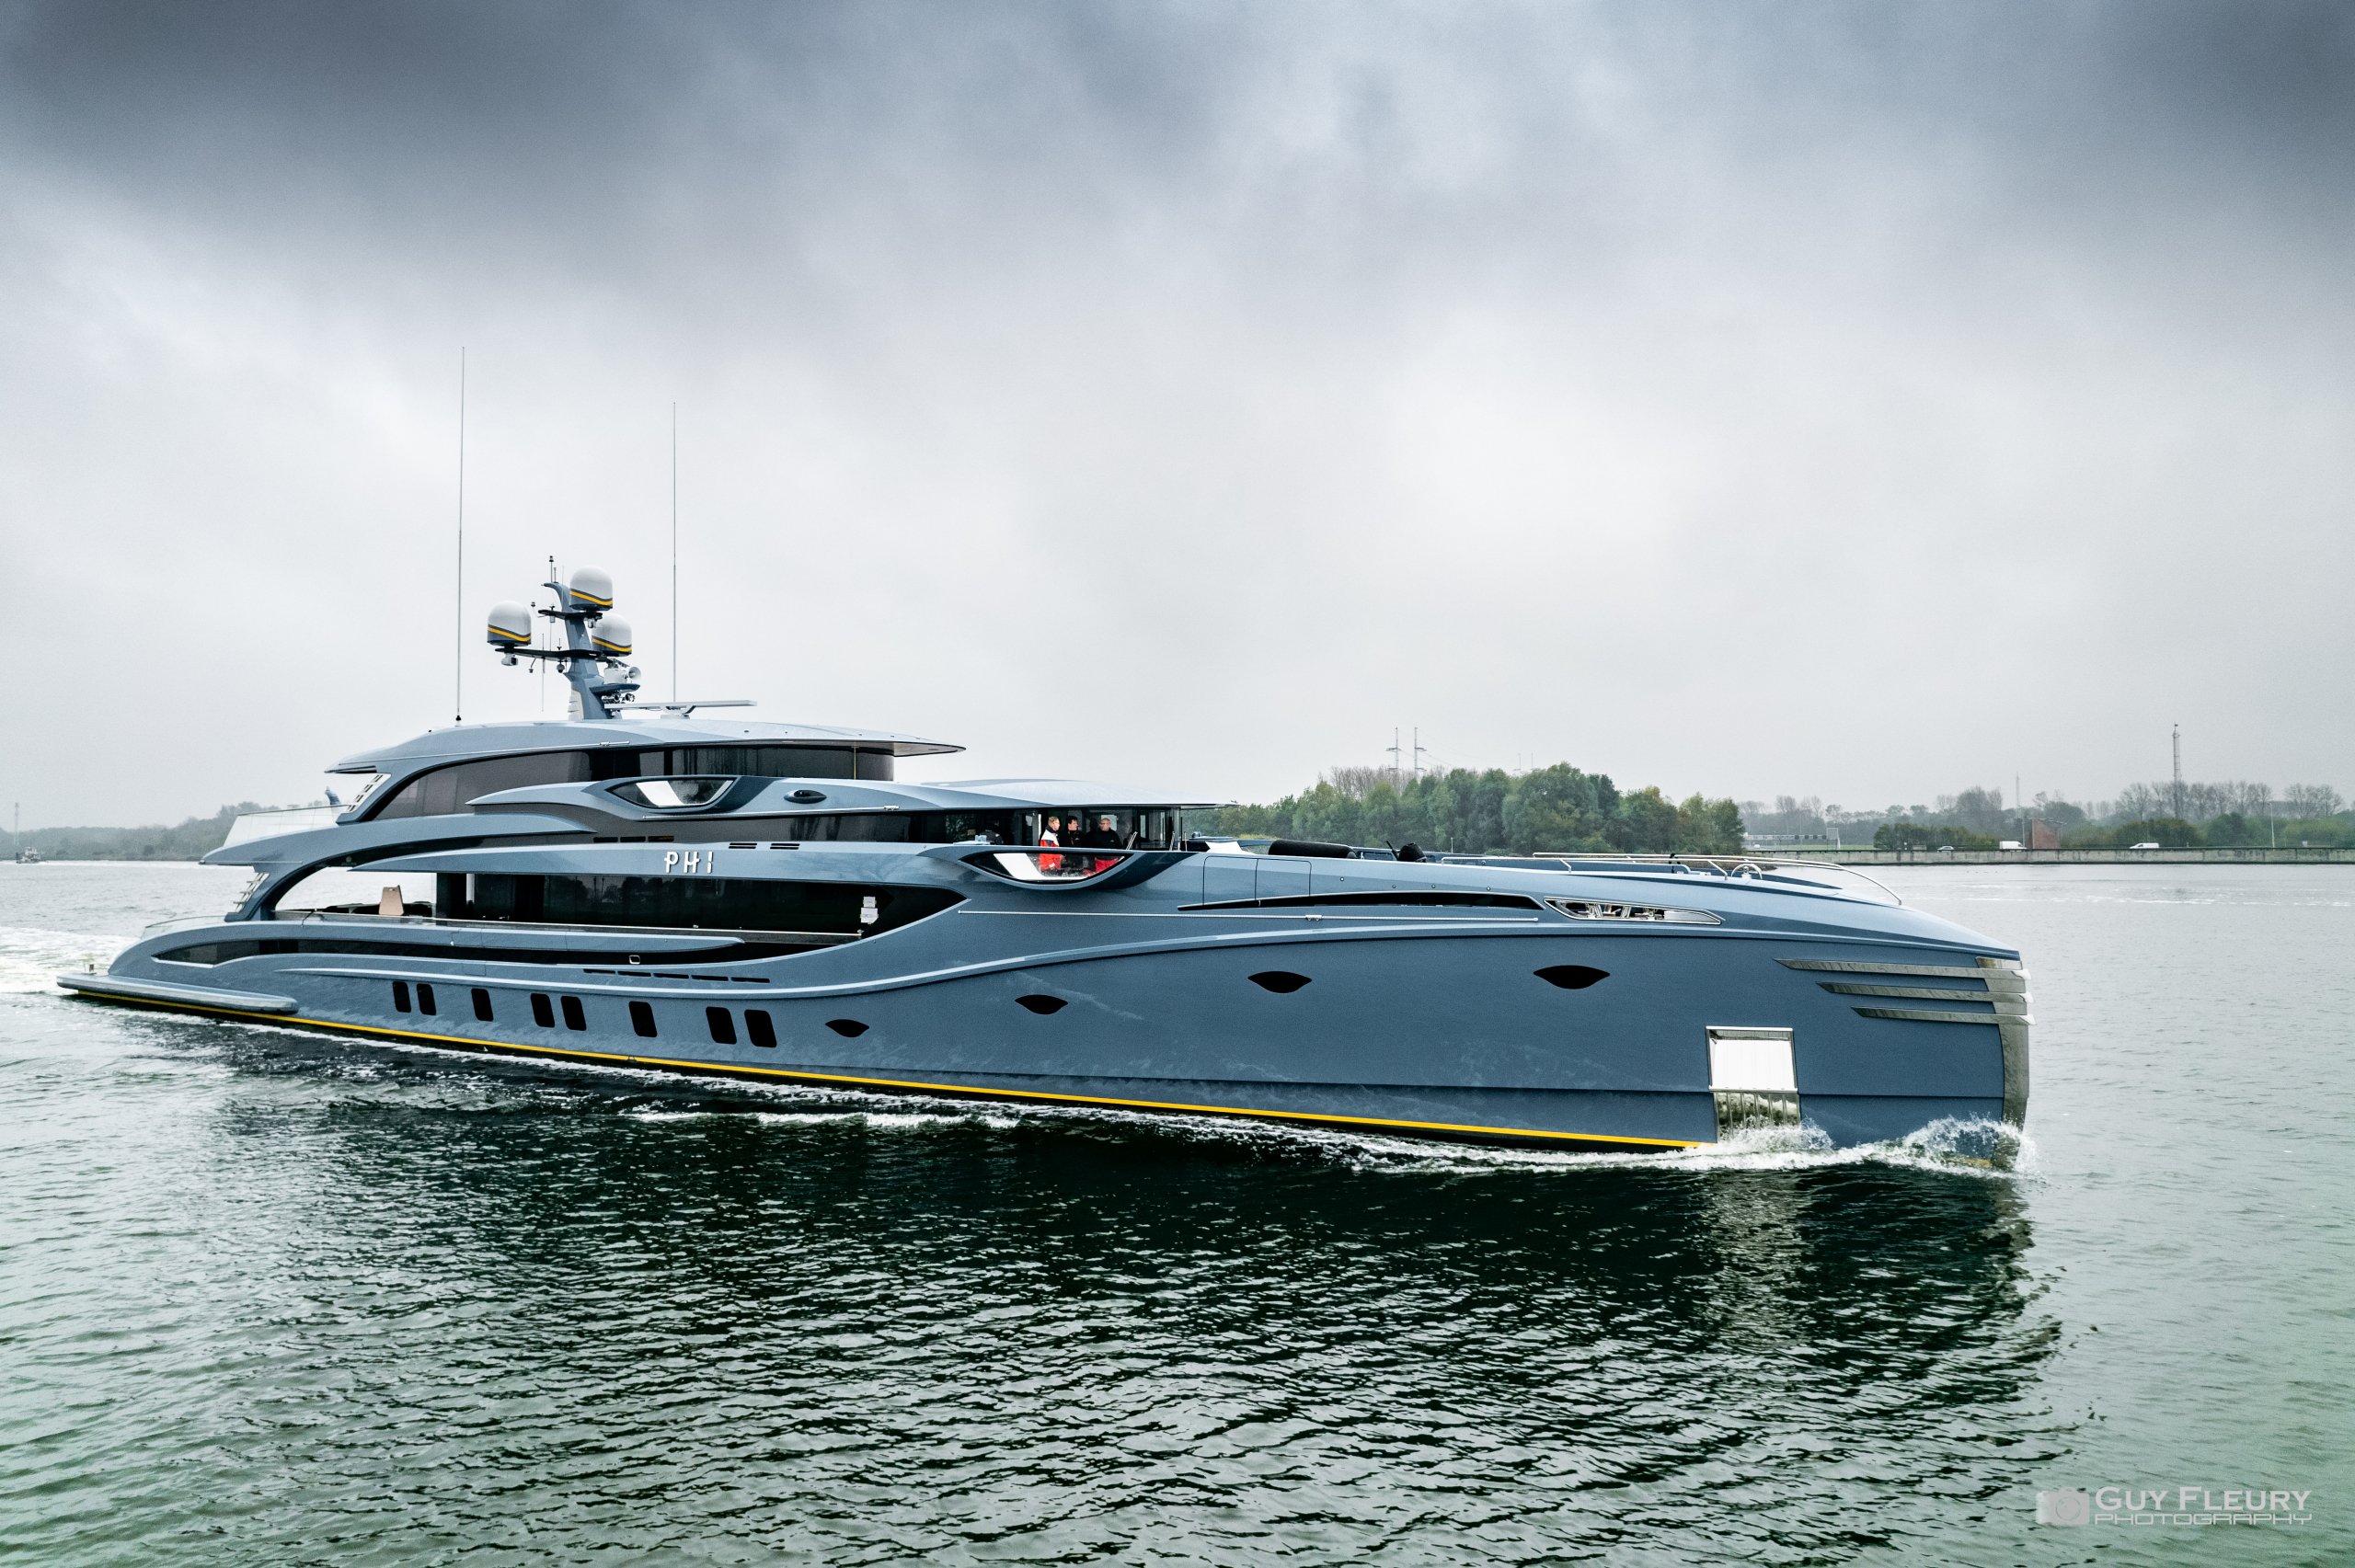 PHI Yacht • Royal Huisman • 2021 • Owner Russian Millionaire